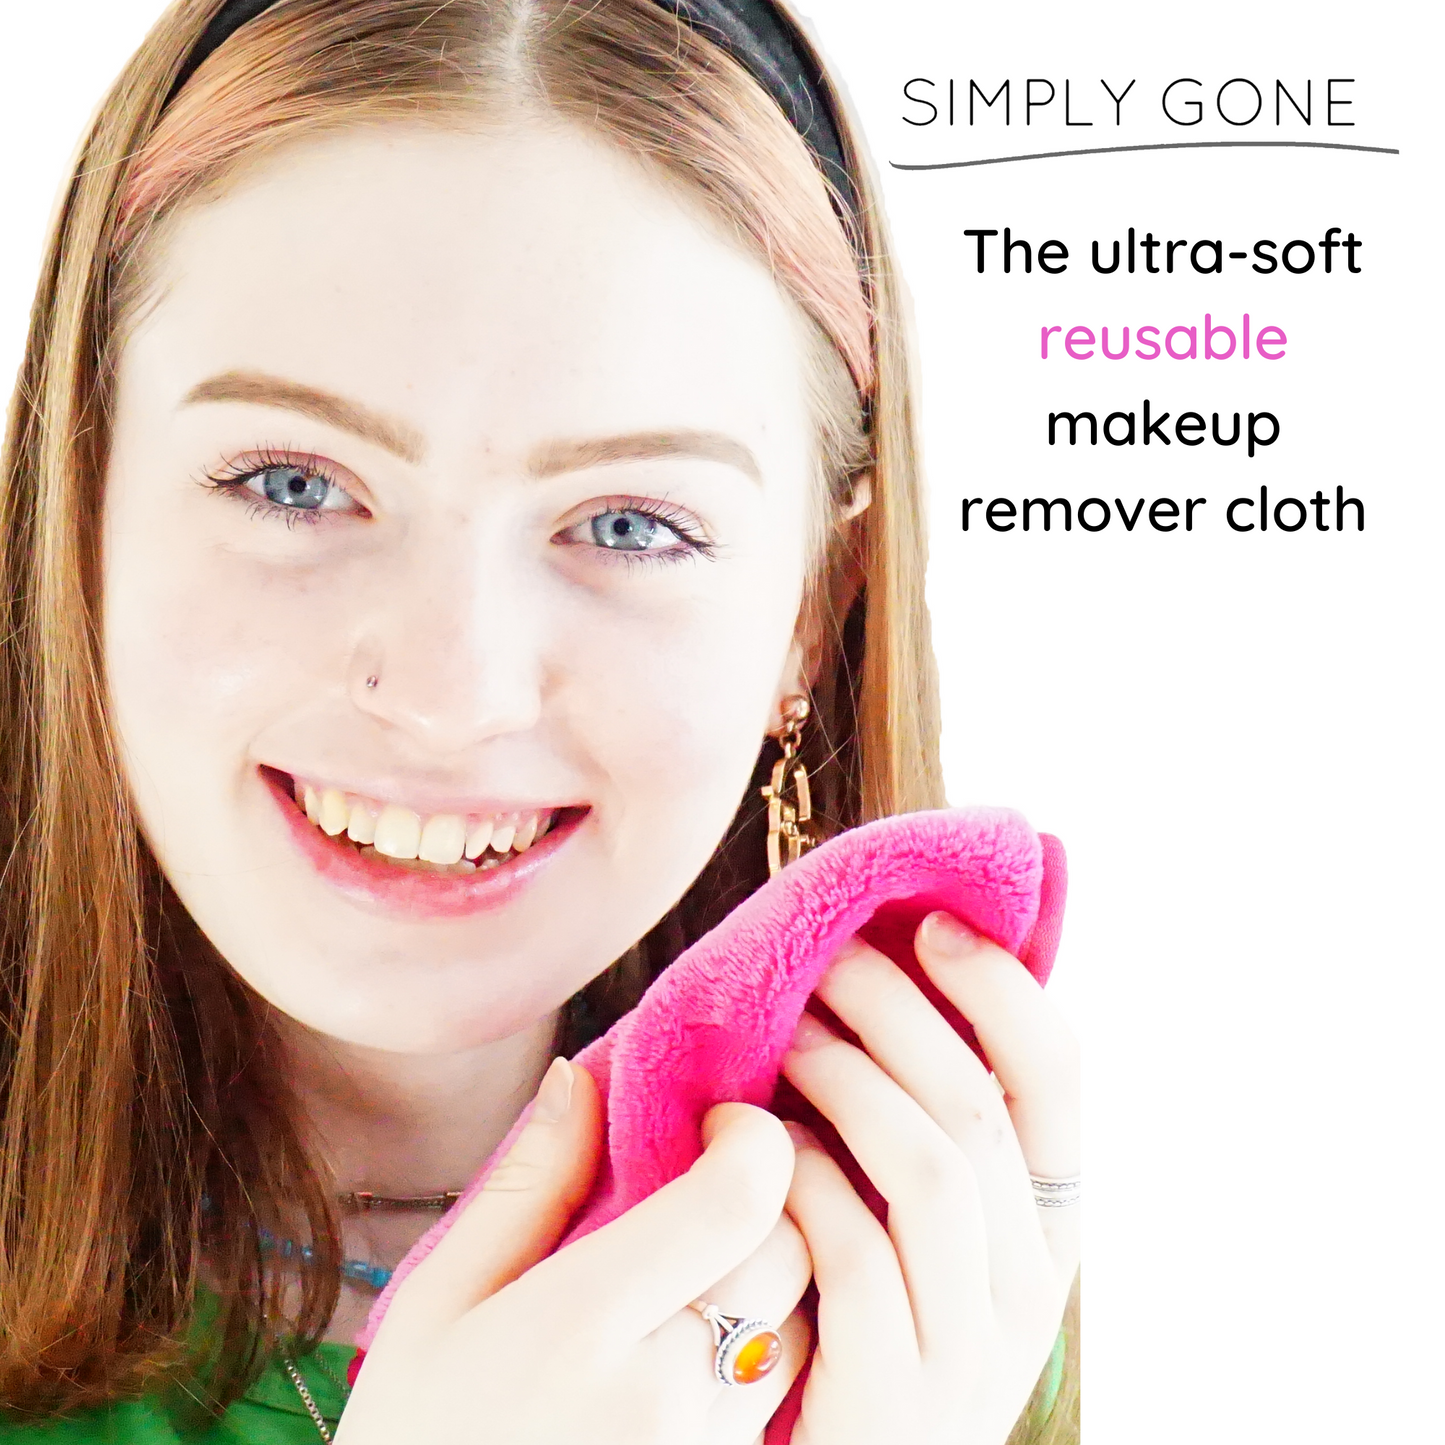 microfibre face mitt, makeup remover cloths, magic cloth for face, Simply Gone